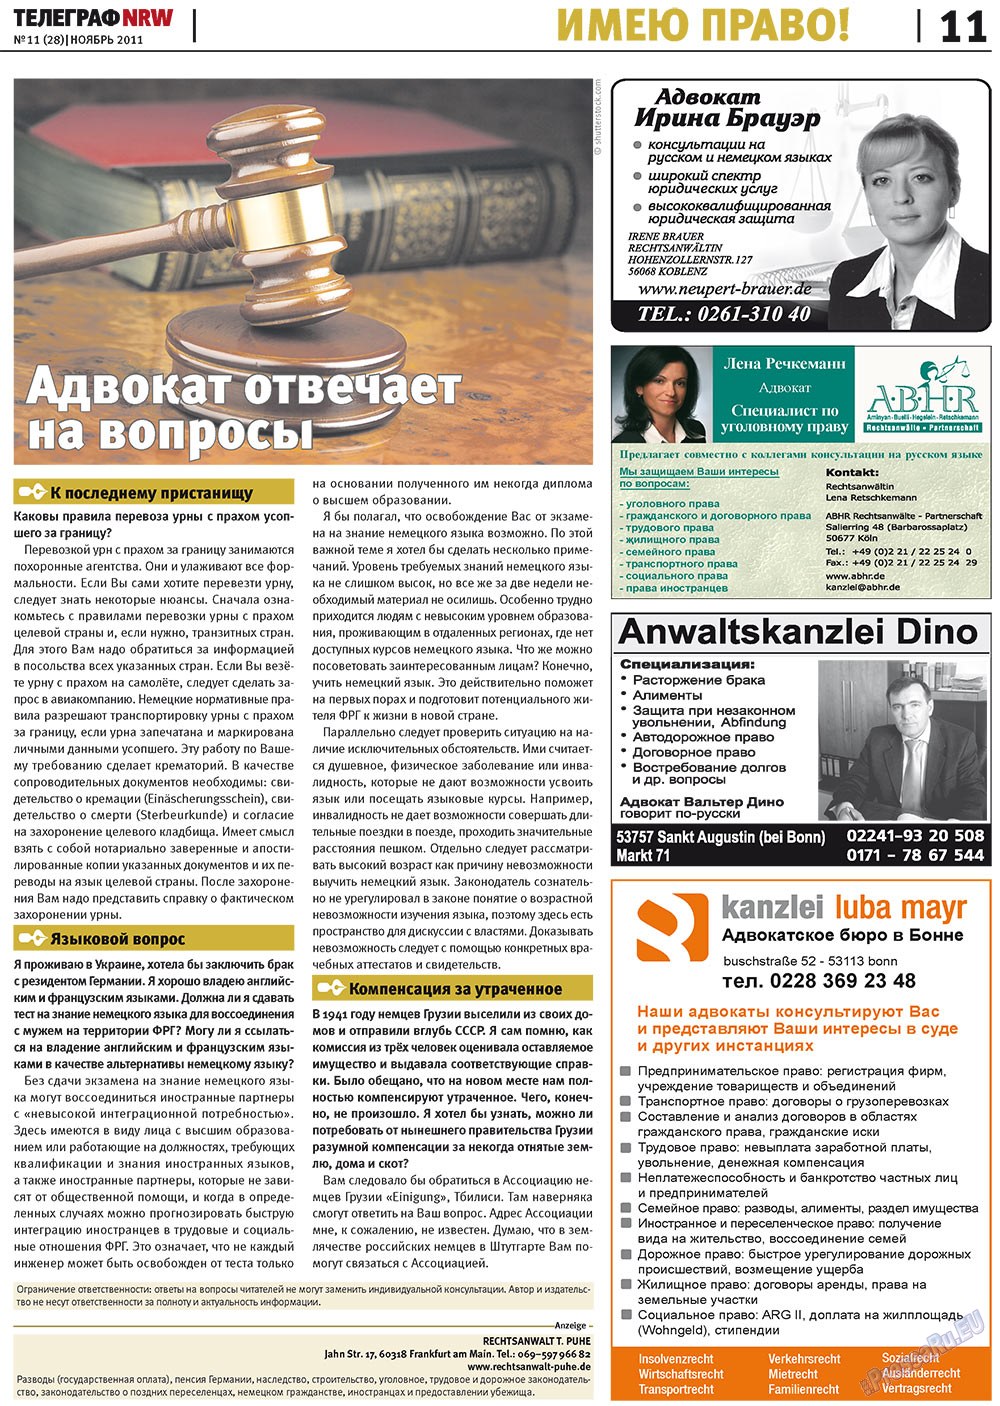 Телеграф NRW, газета. 2011 №11 стр.11